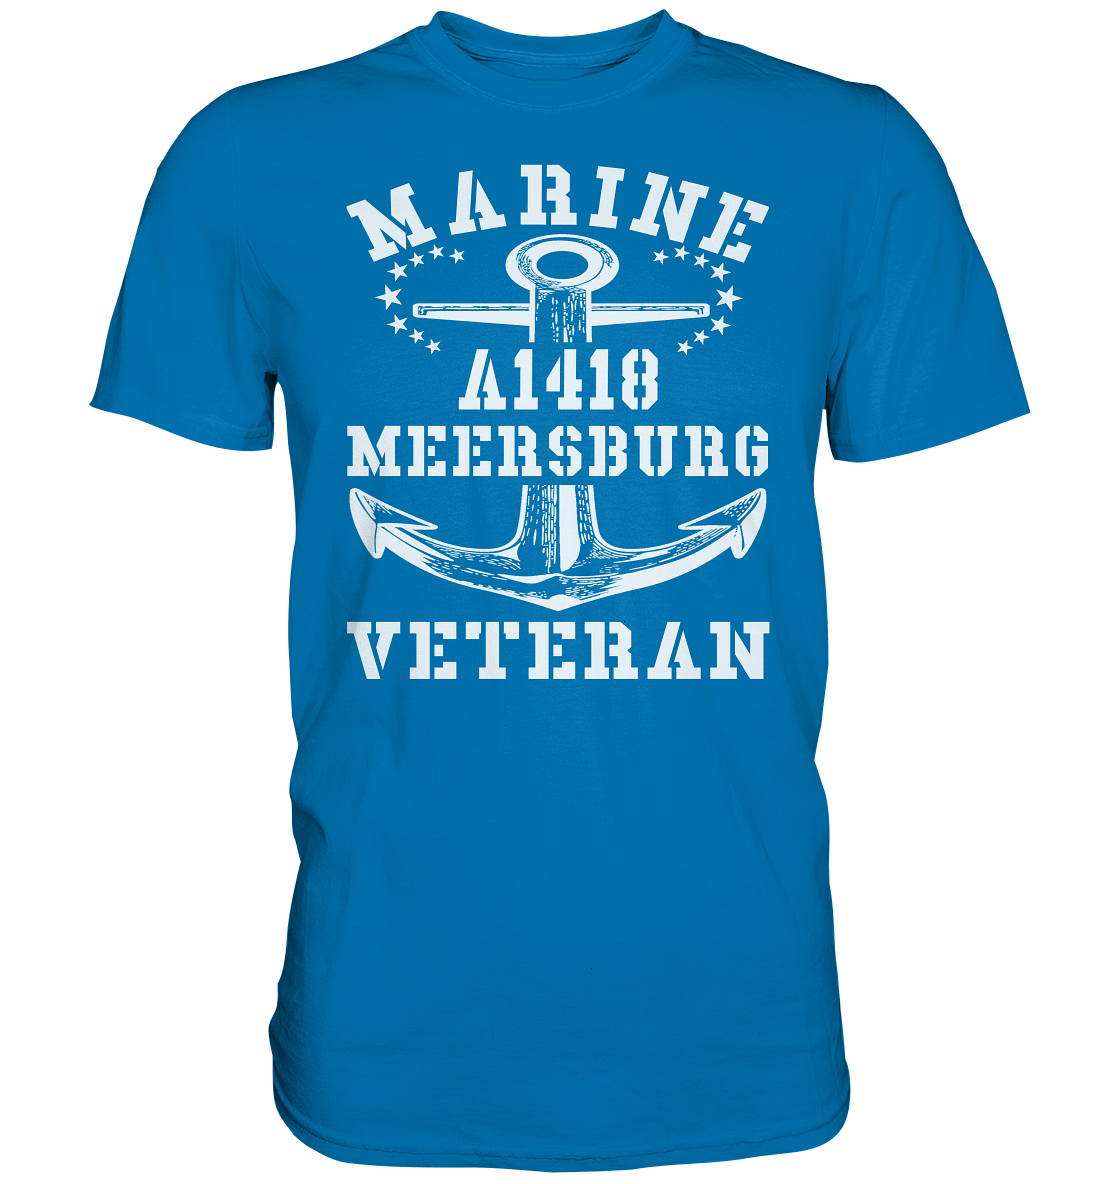 Troßschiff A1418 MEERSBURG Marine Veteran - Premium Shirt